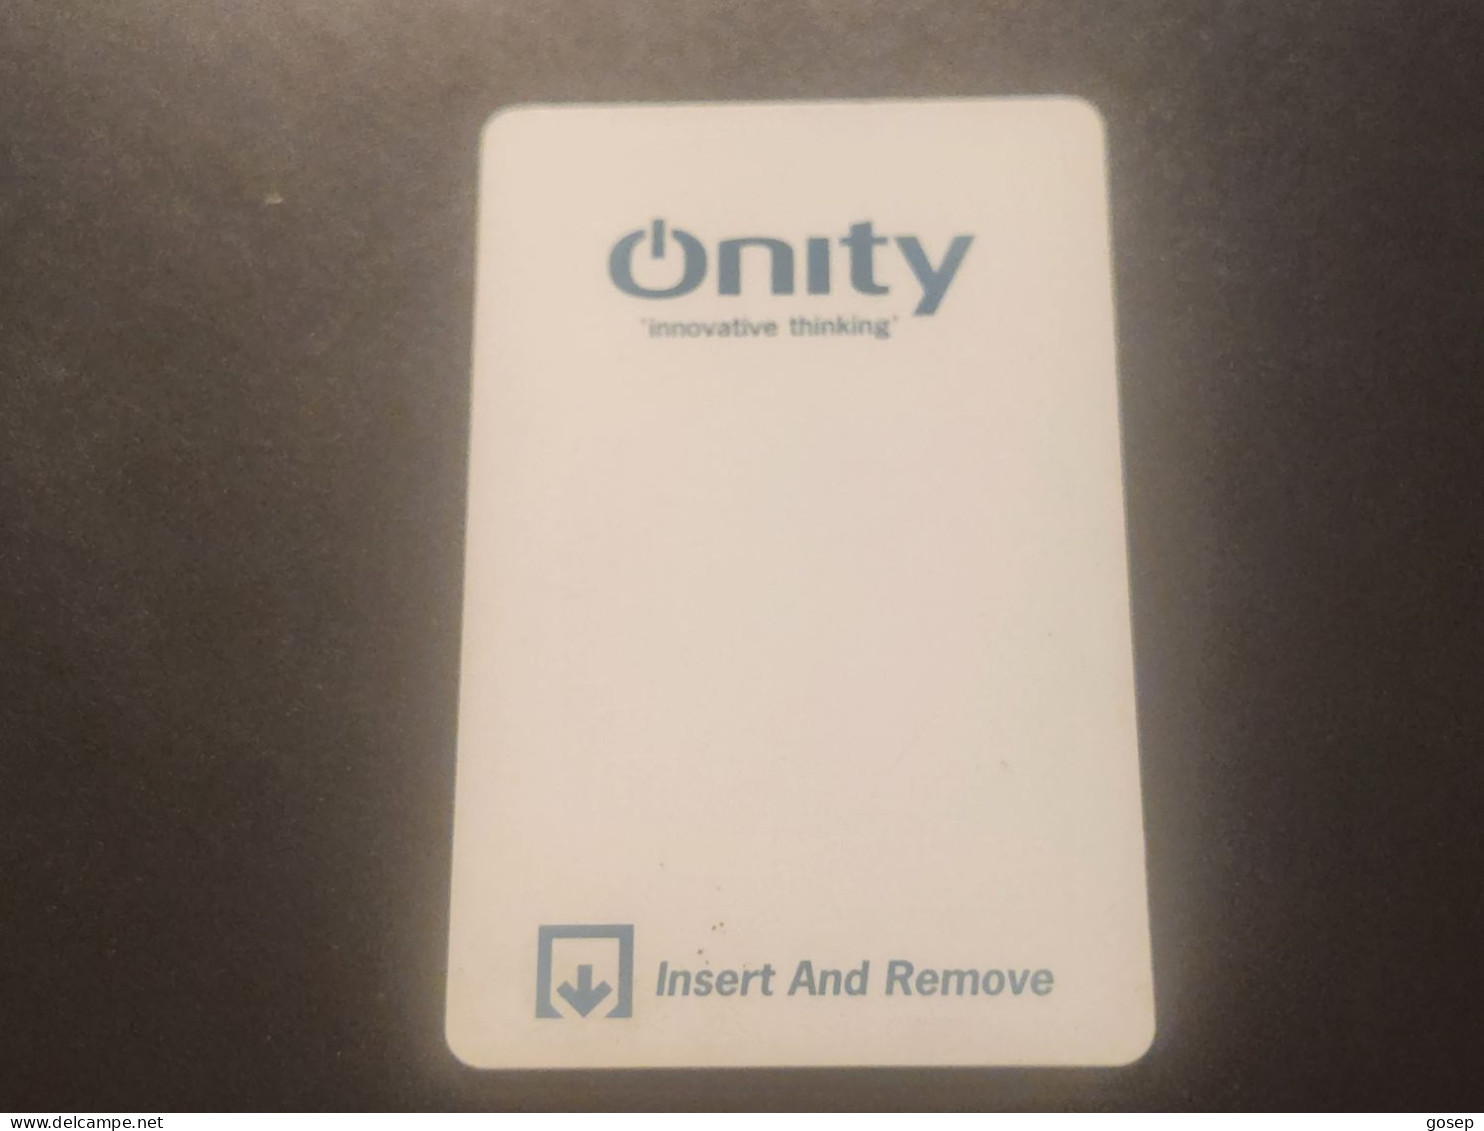 Onity HOTAL KEY-(1048)(?)GOOD CARD - Chiavi Elettroniche Di Alberghi